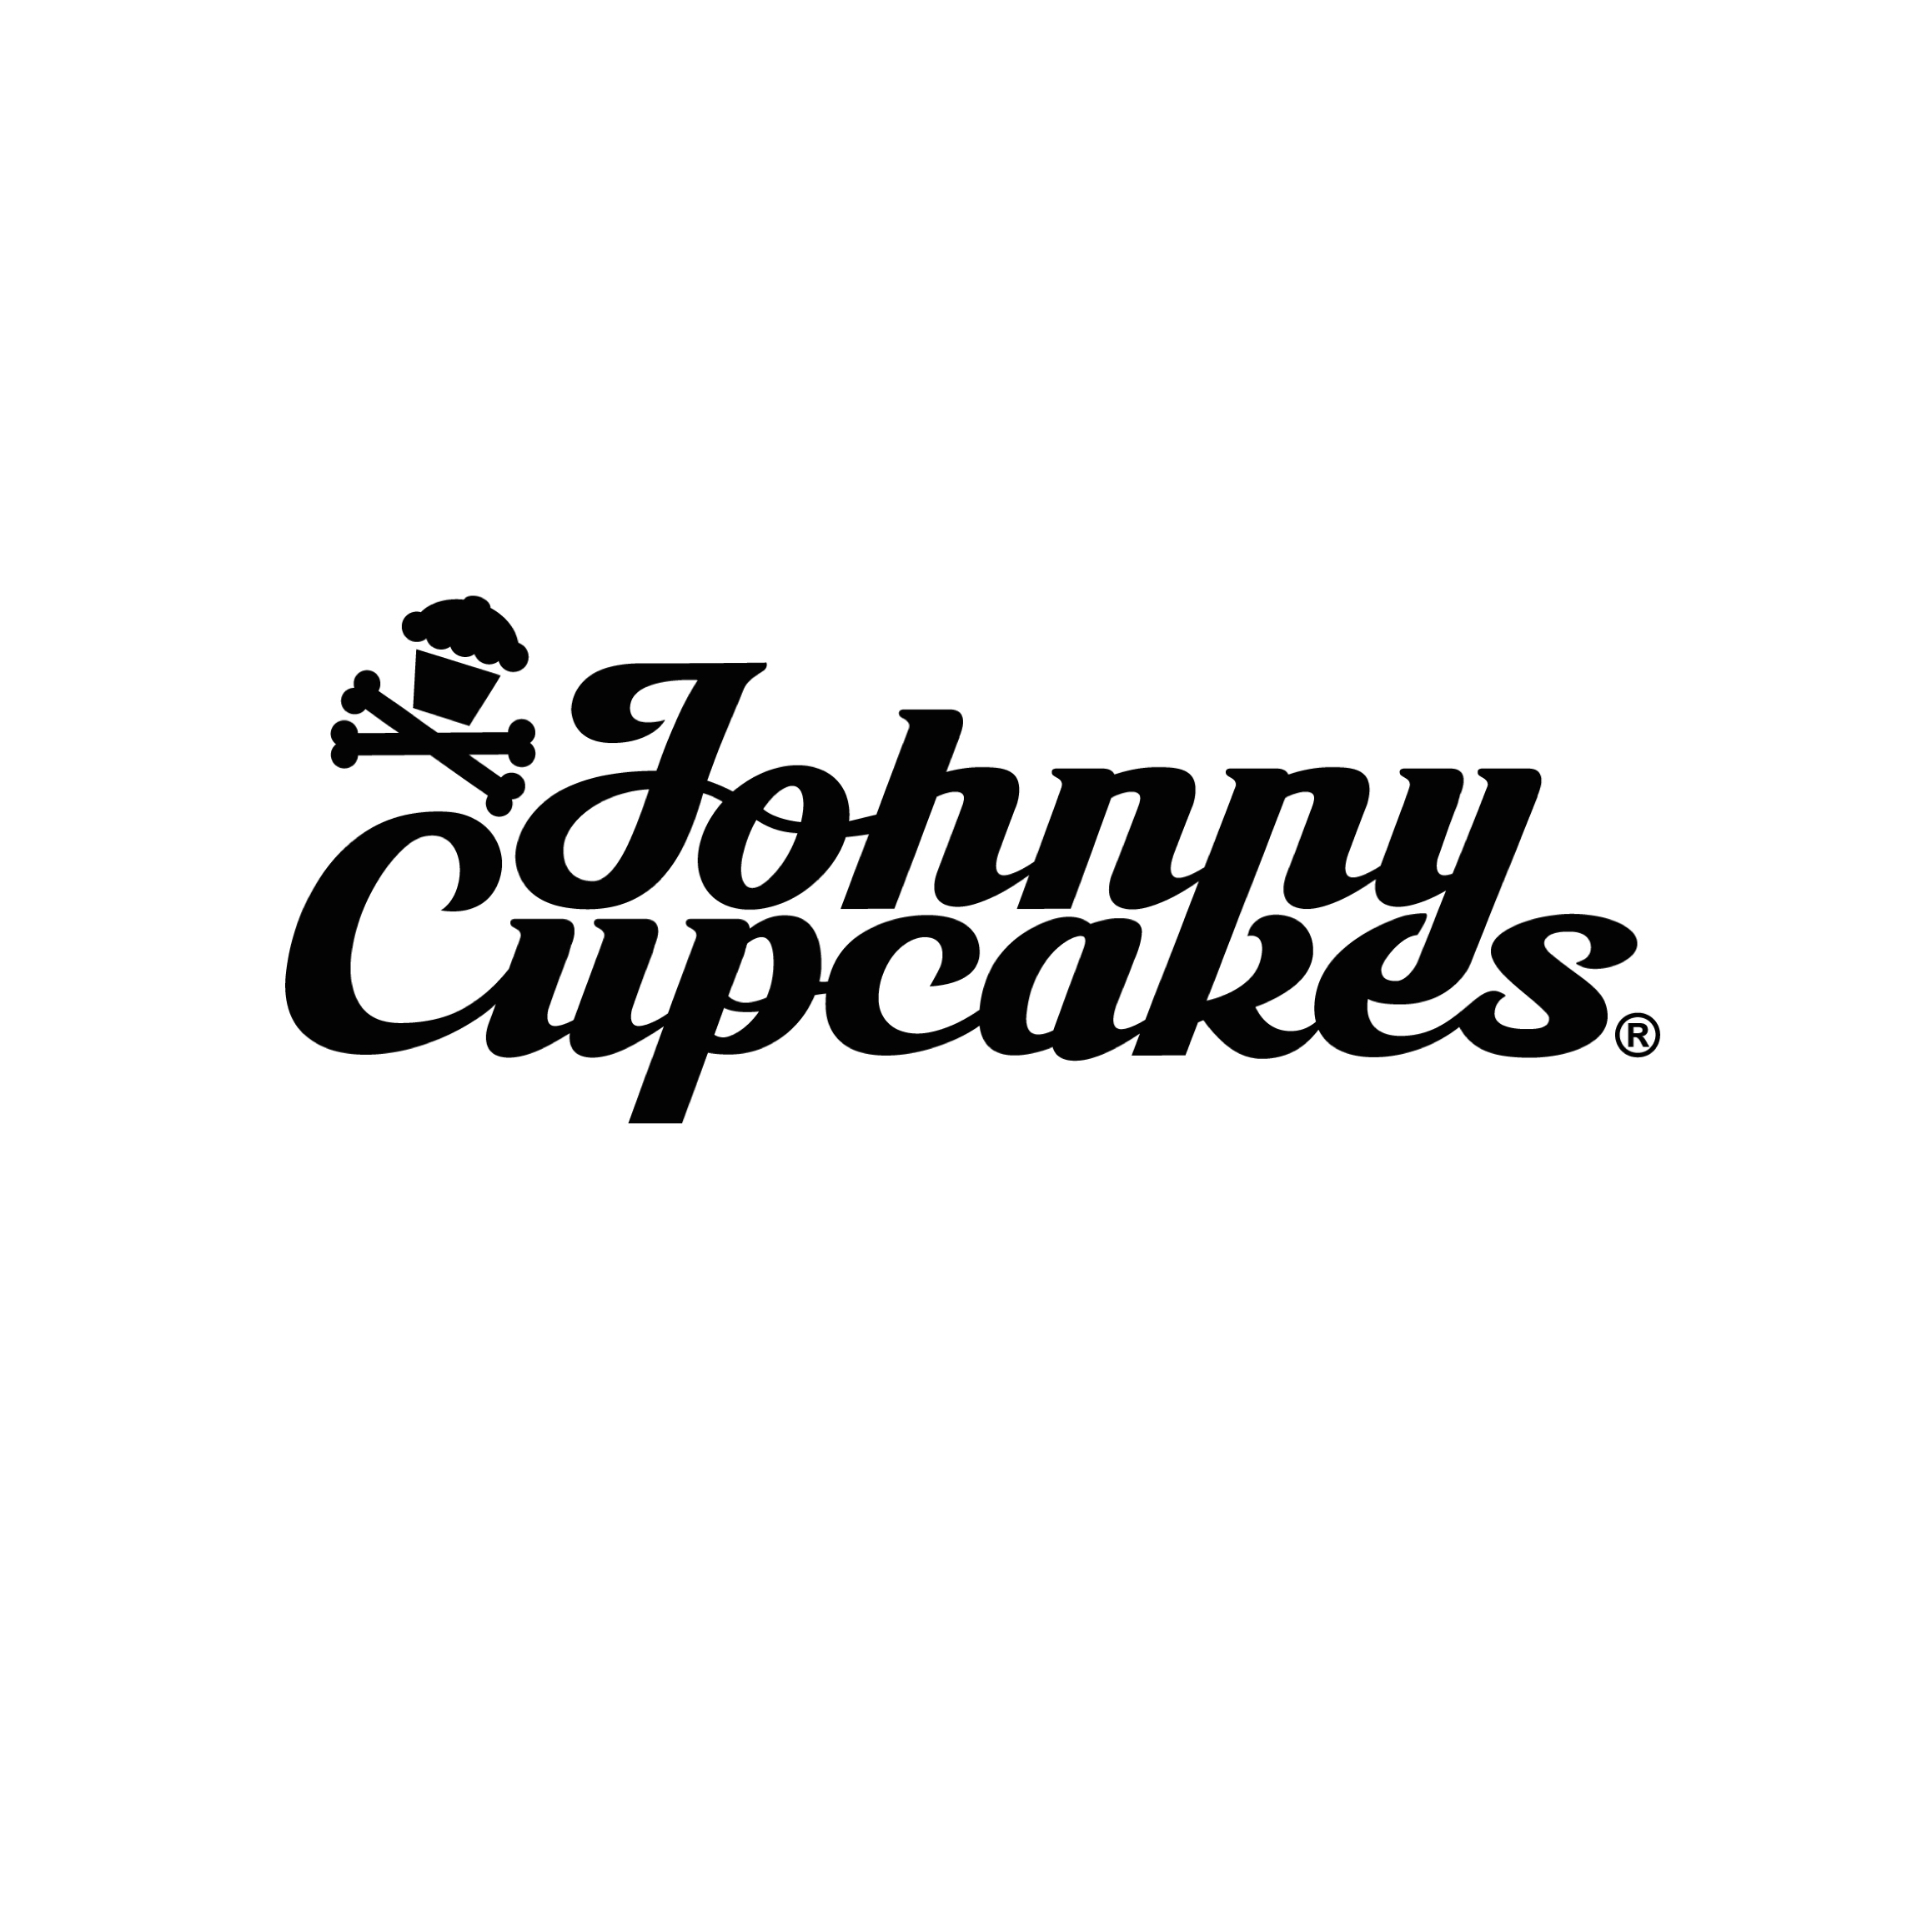 Johnny_Cupcakes_web_prepped_logo.jpg